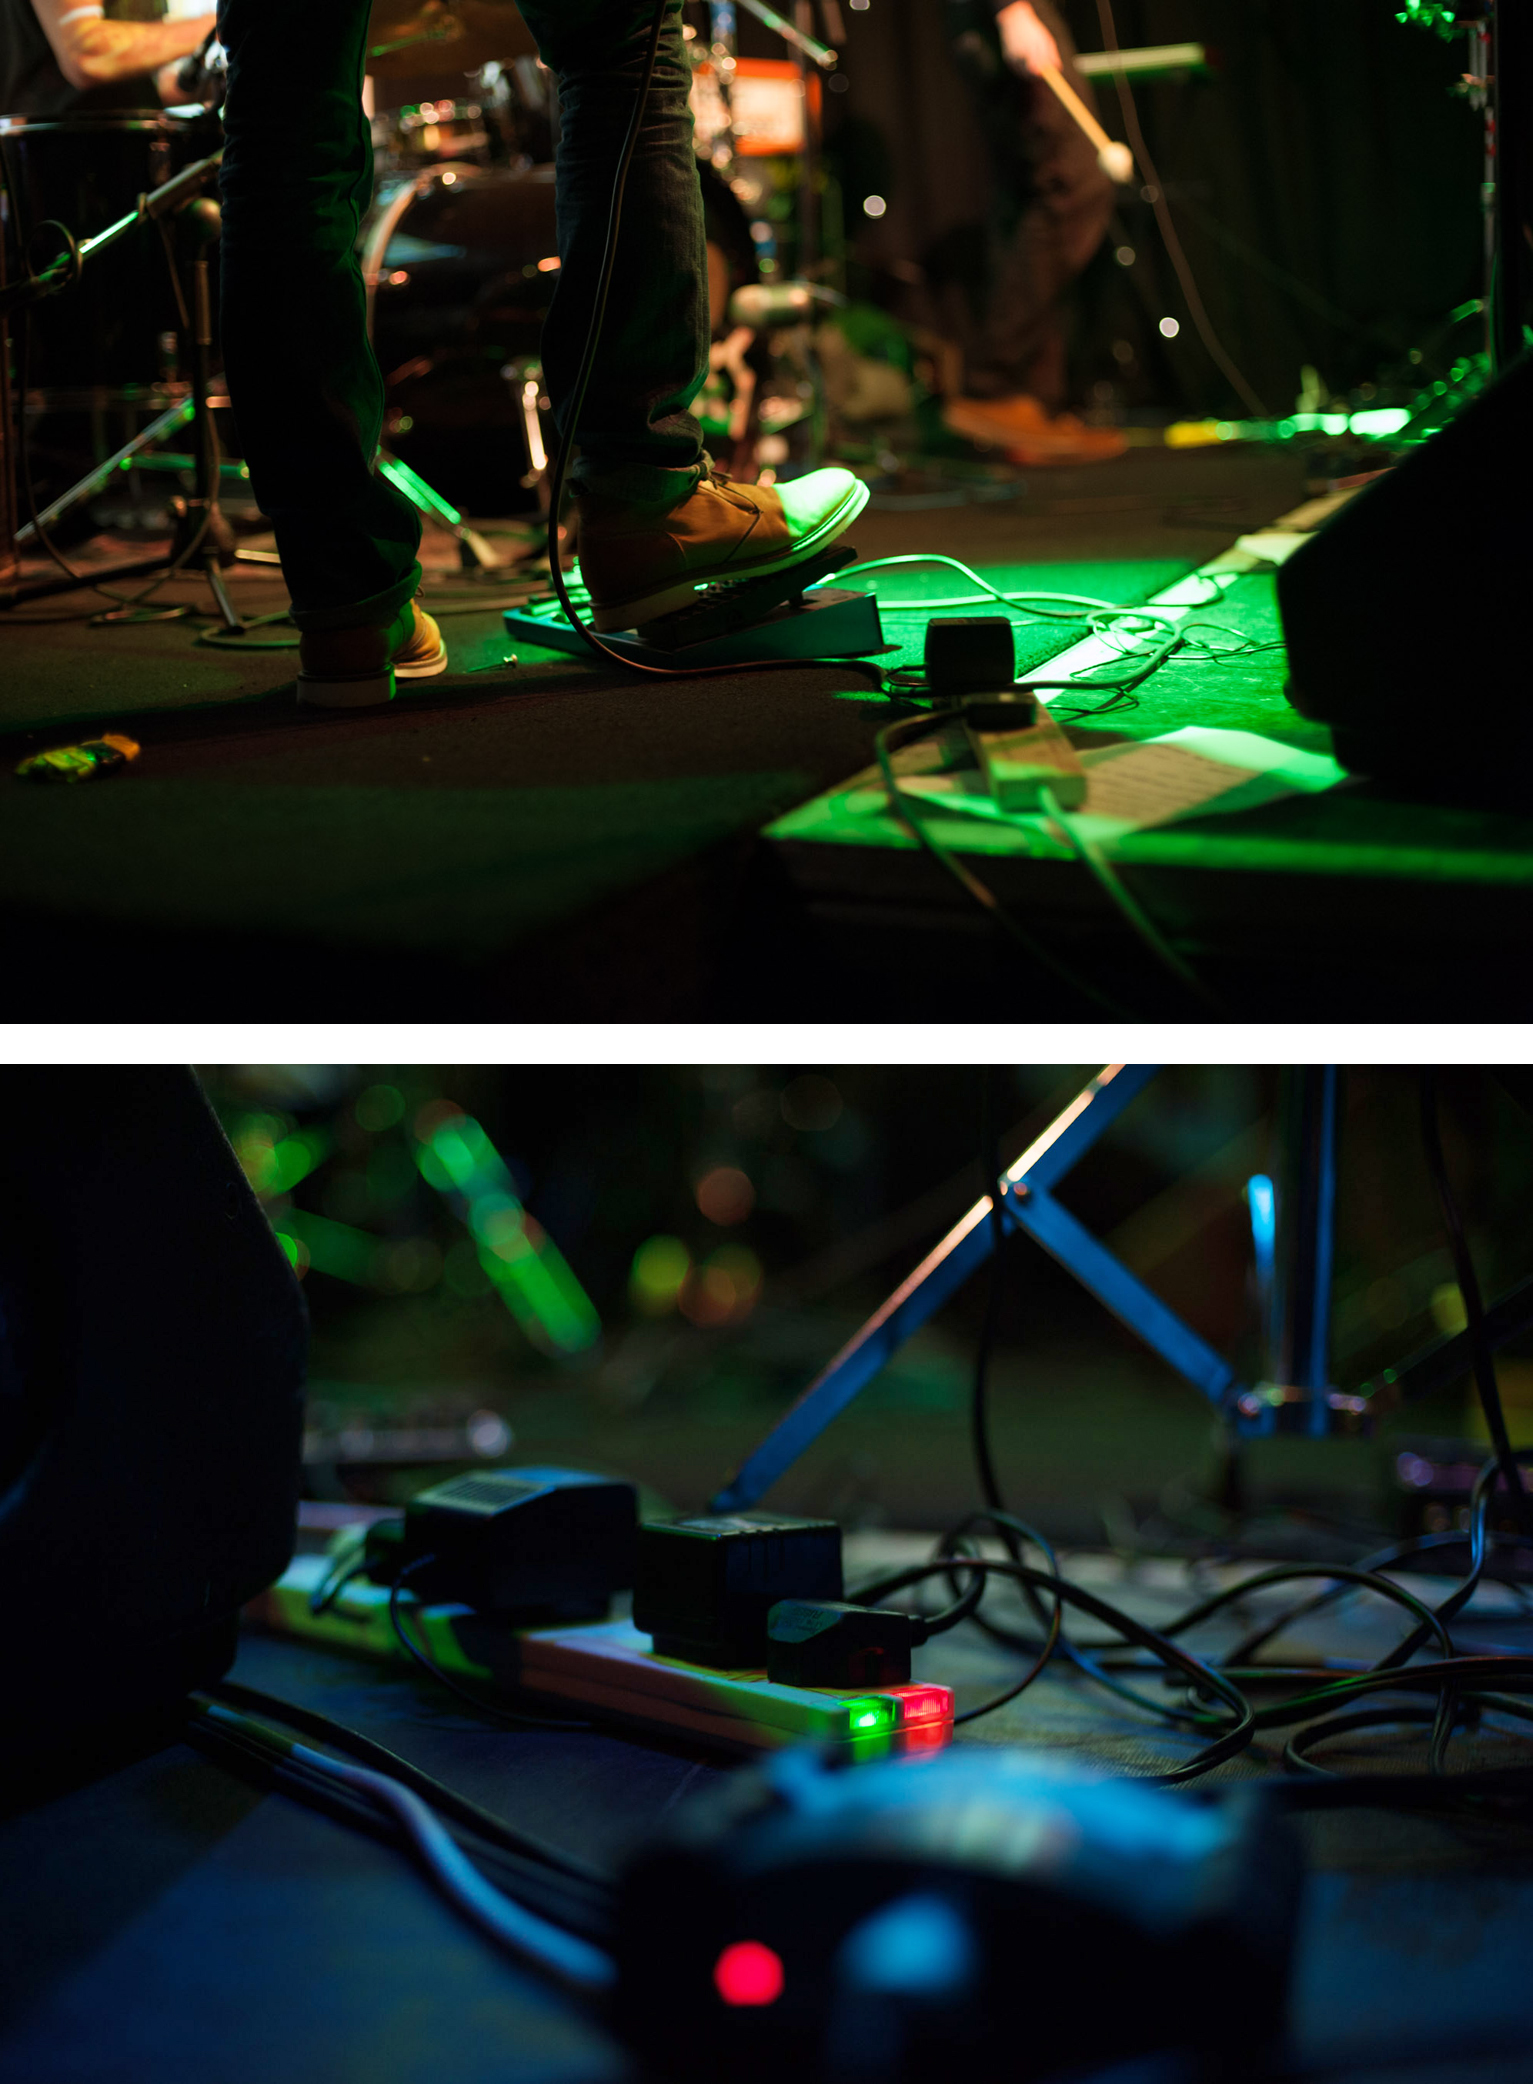 Snide Rhythms.  Live at Limbo 7th December 2012